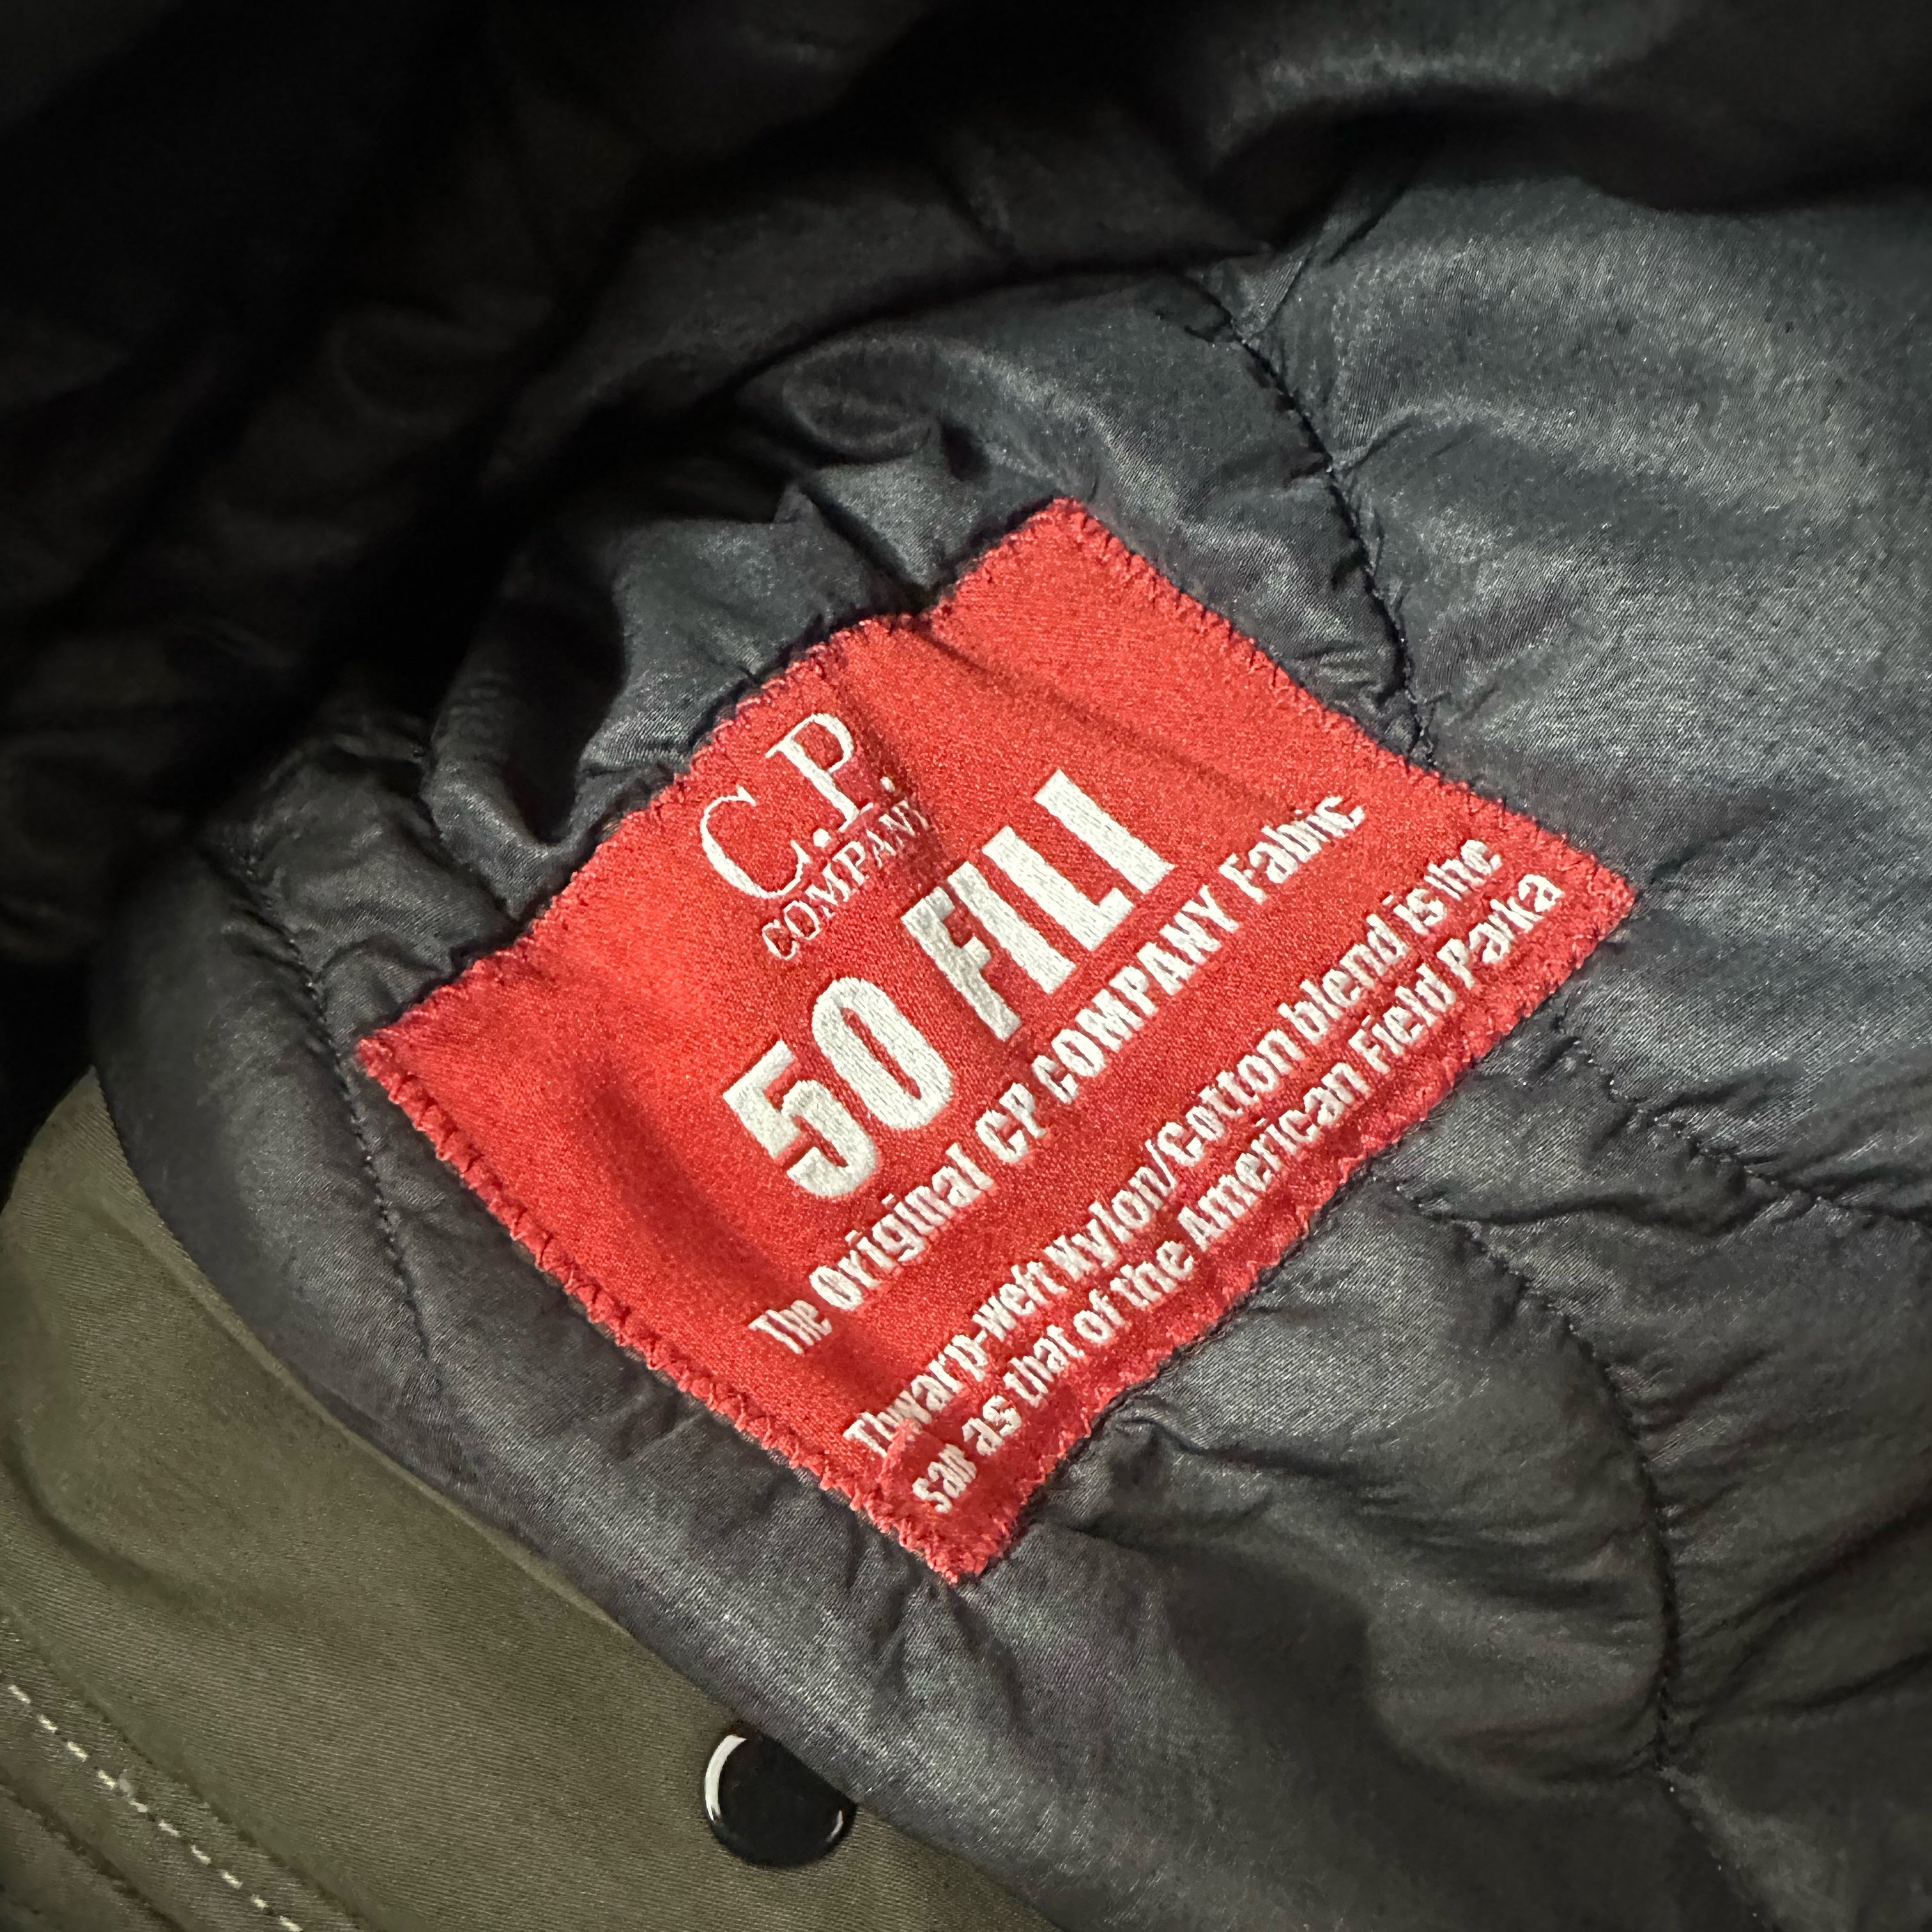 CP Company 50 Fili Insulated Parka Jacket with Fur Hood